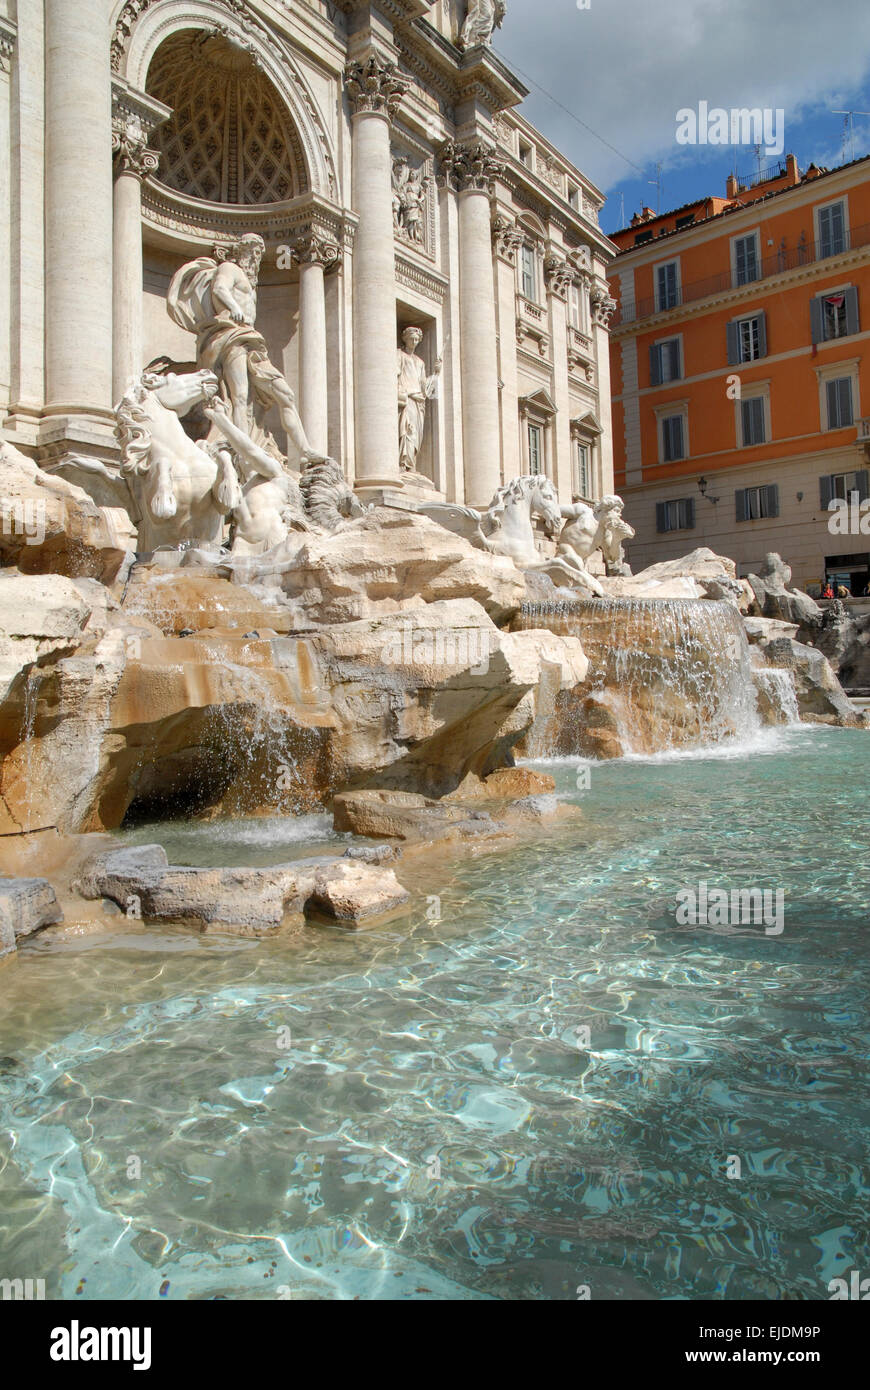 La Fontana di Trevi, Roma Foto de stock